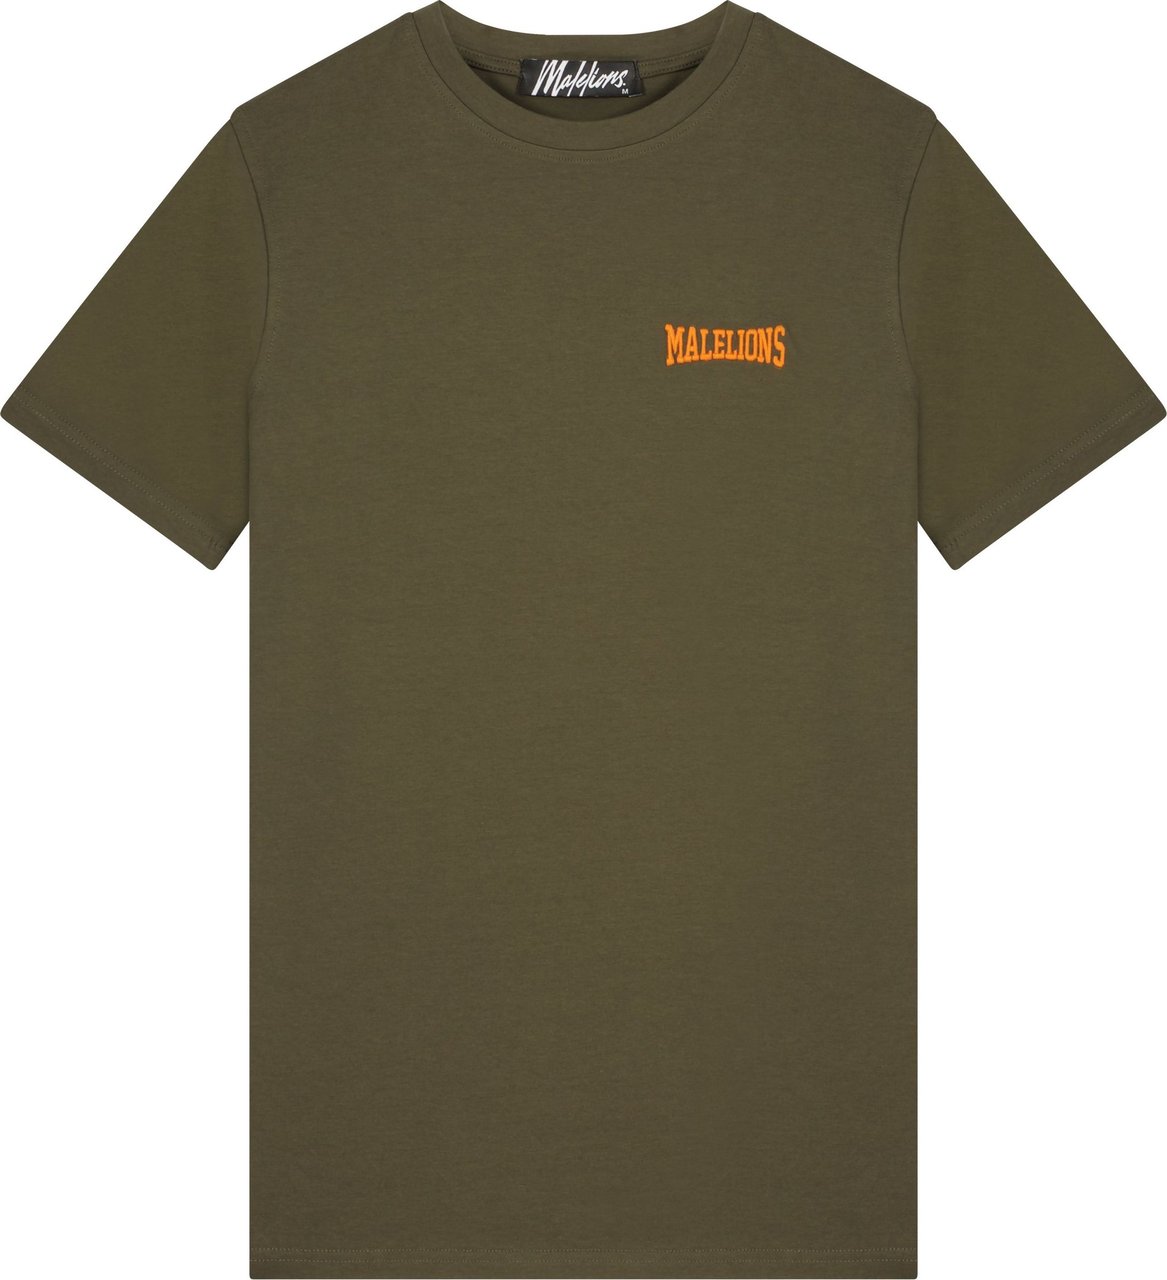 Malelions Boxer T-Shirt - Army/Orange Green